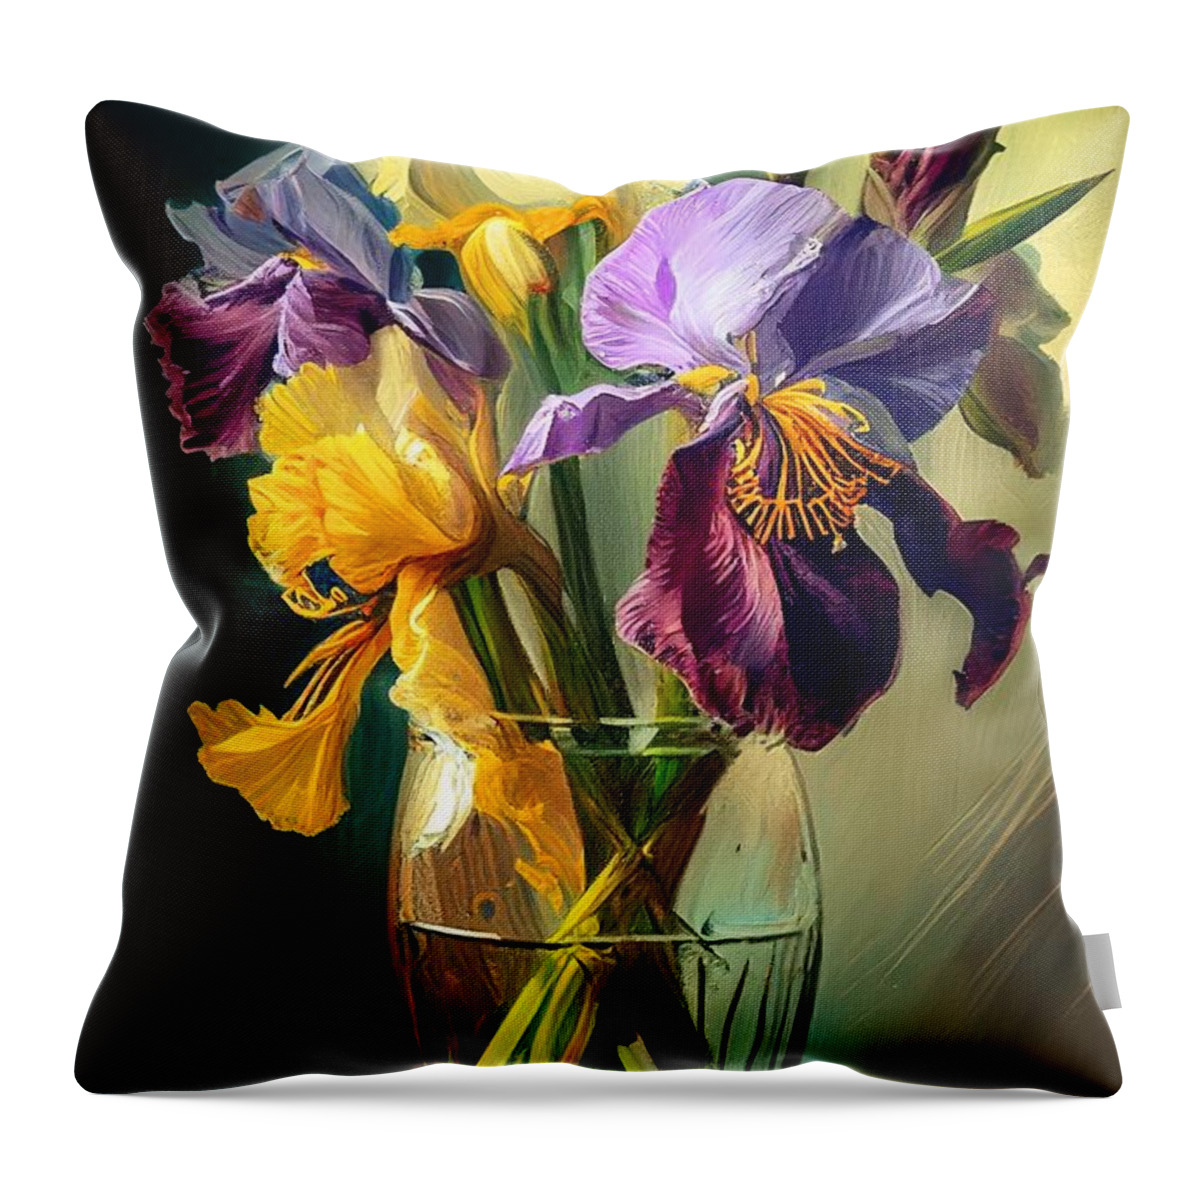 Irises Throw Pillow featuring the mixed media Irises 2 by Binka Kirova